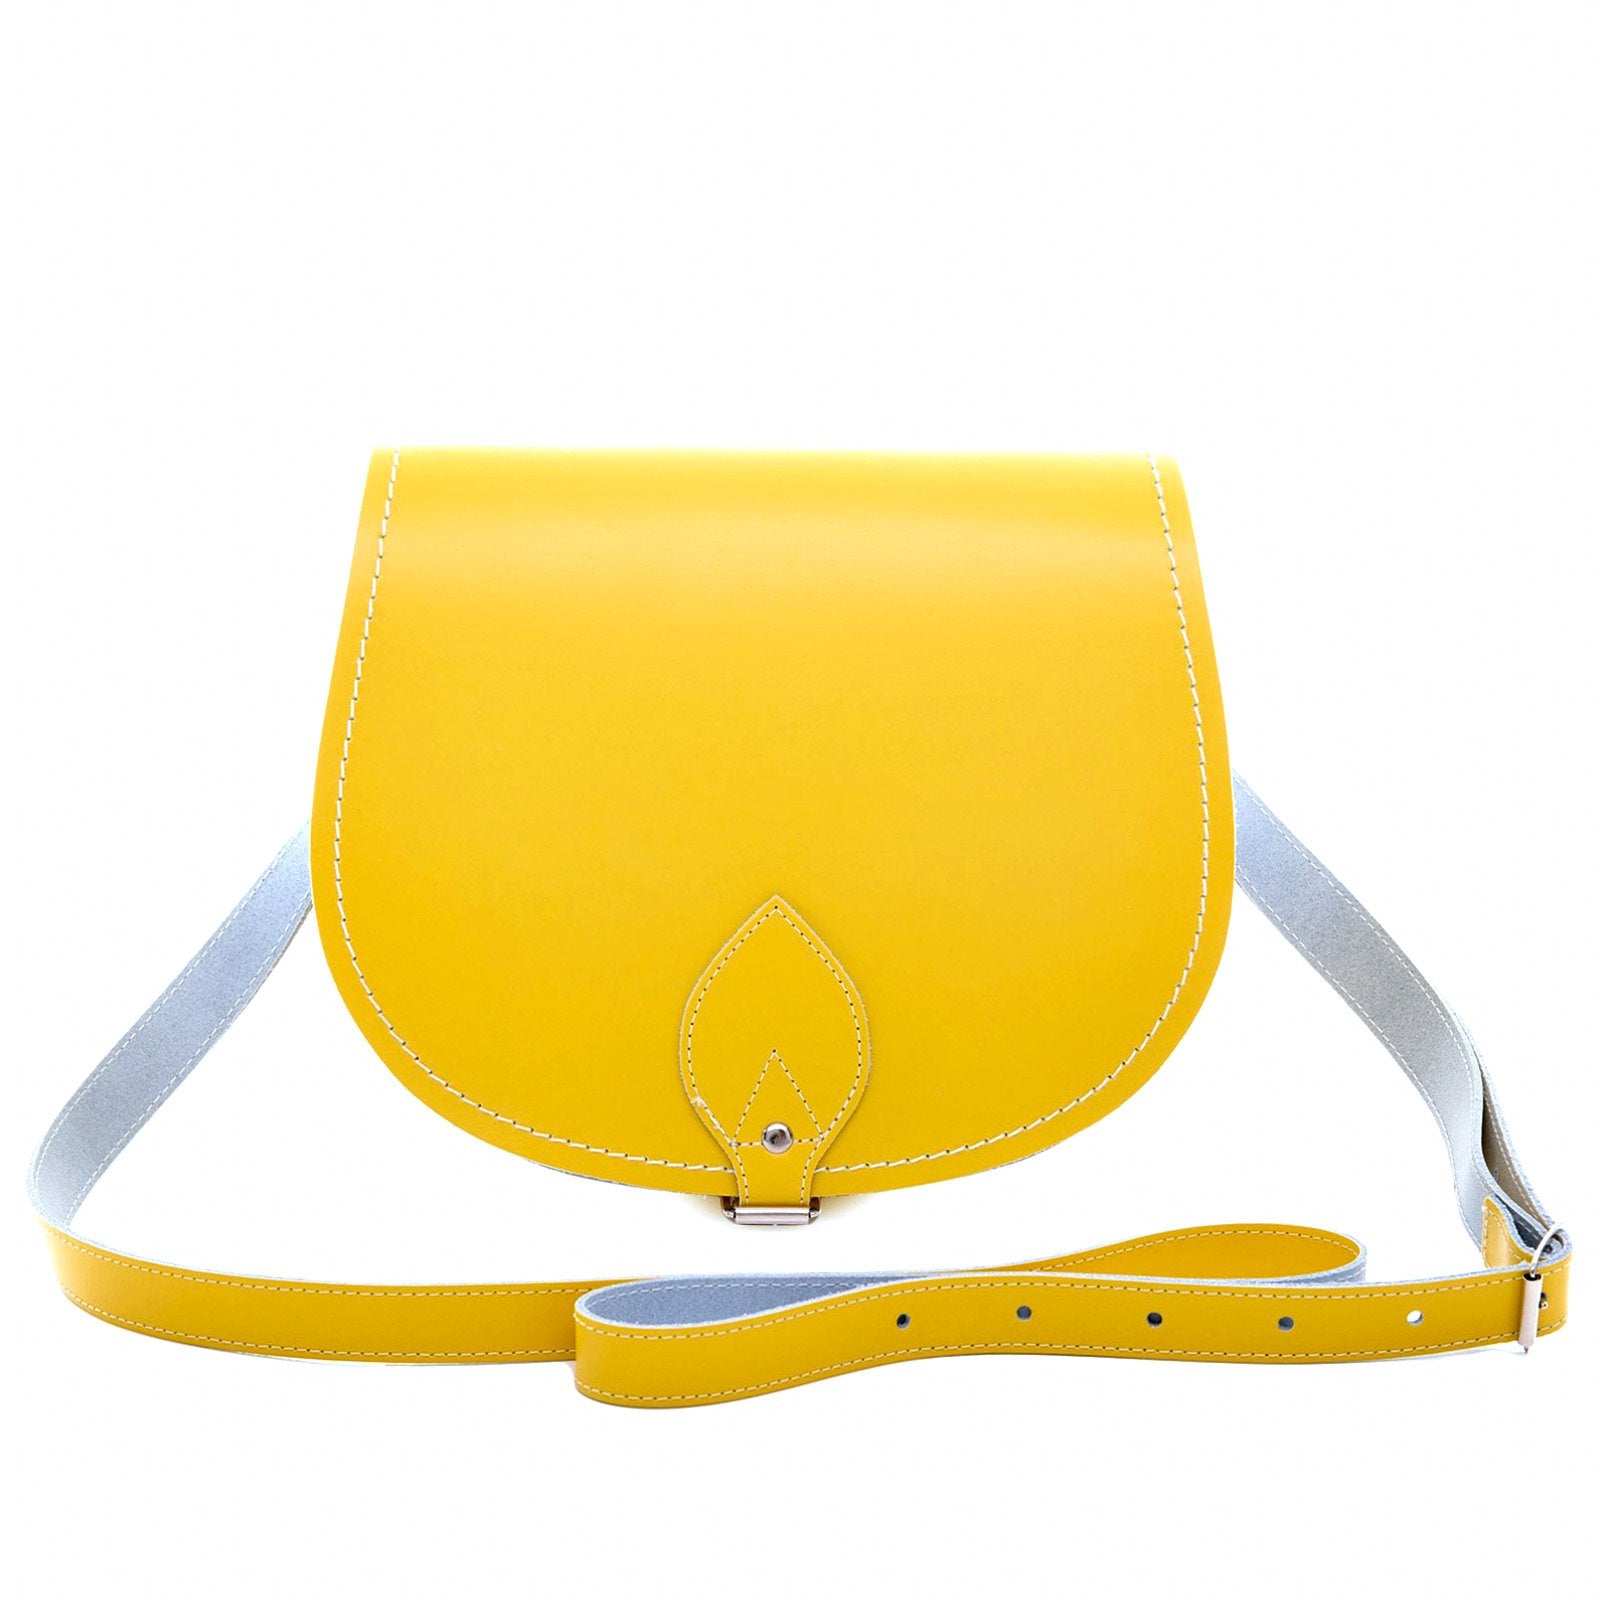 Handmade Leather Saddle Bag - Pastel Daffodil Yellow - Large